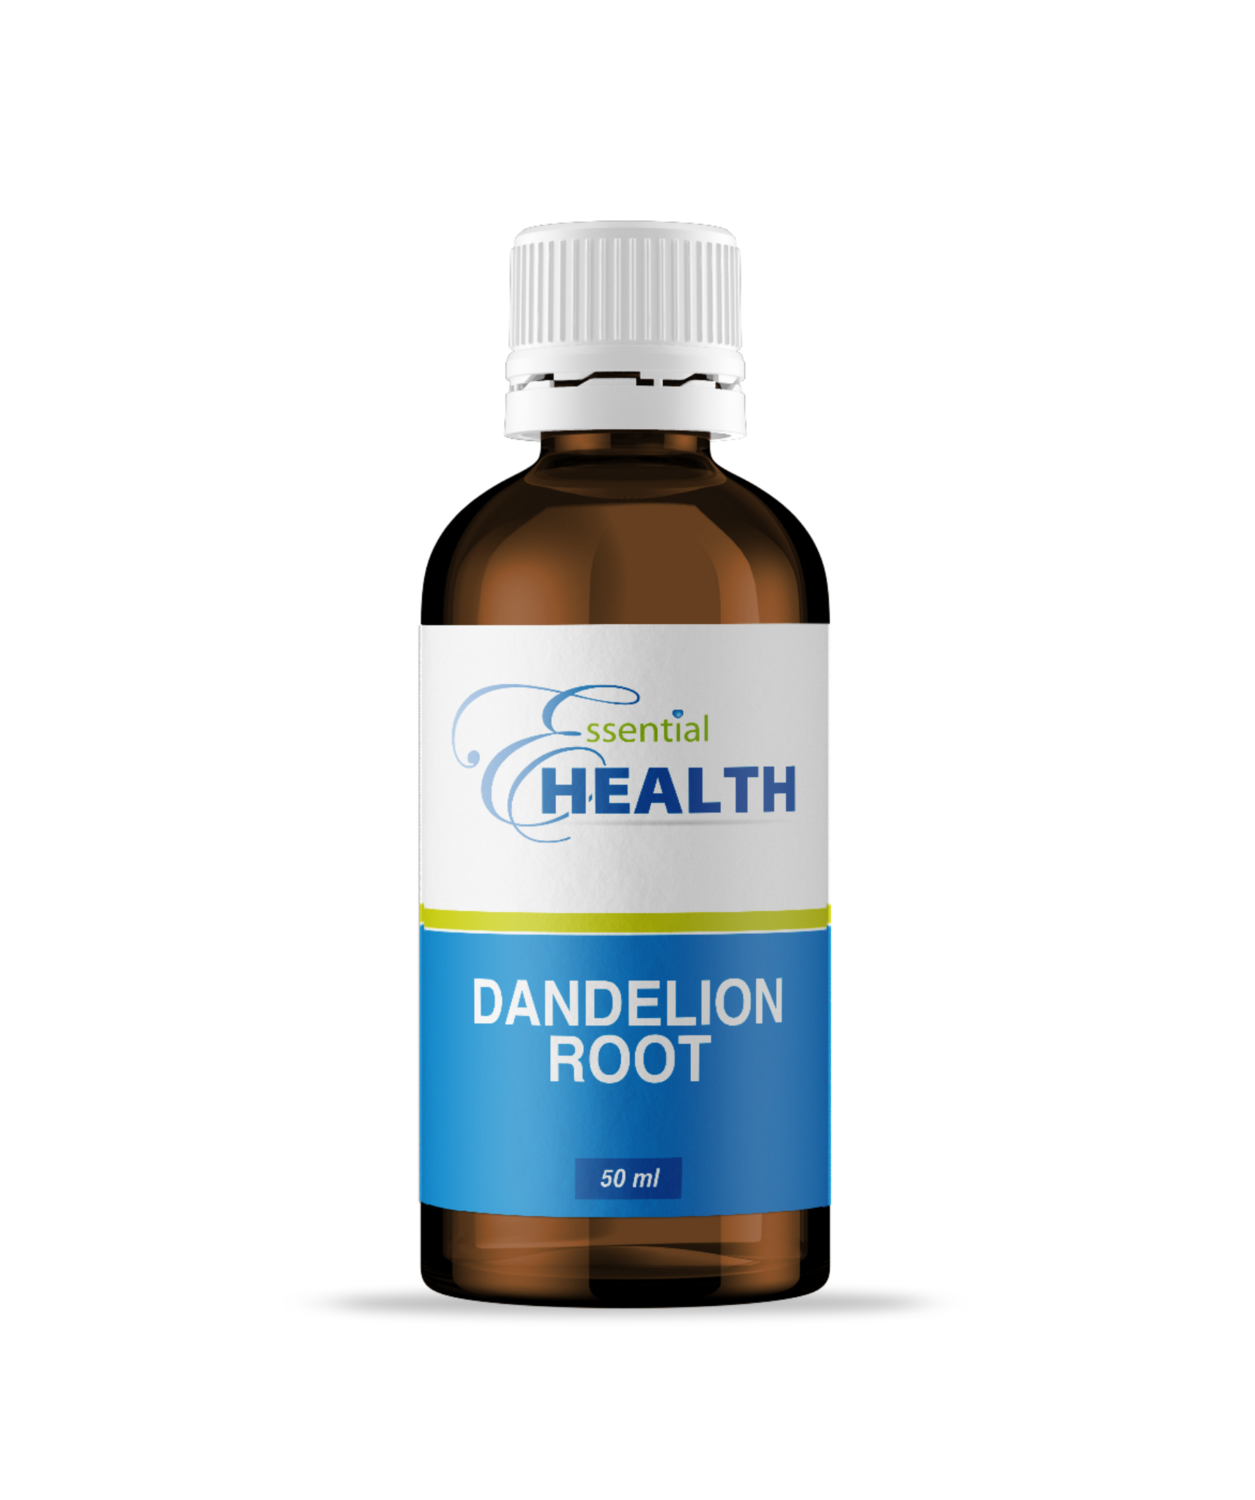 Essential Health Dandelion Root 50ml